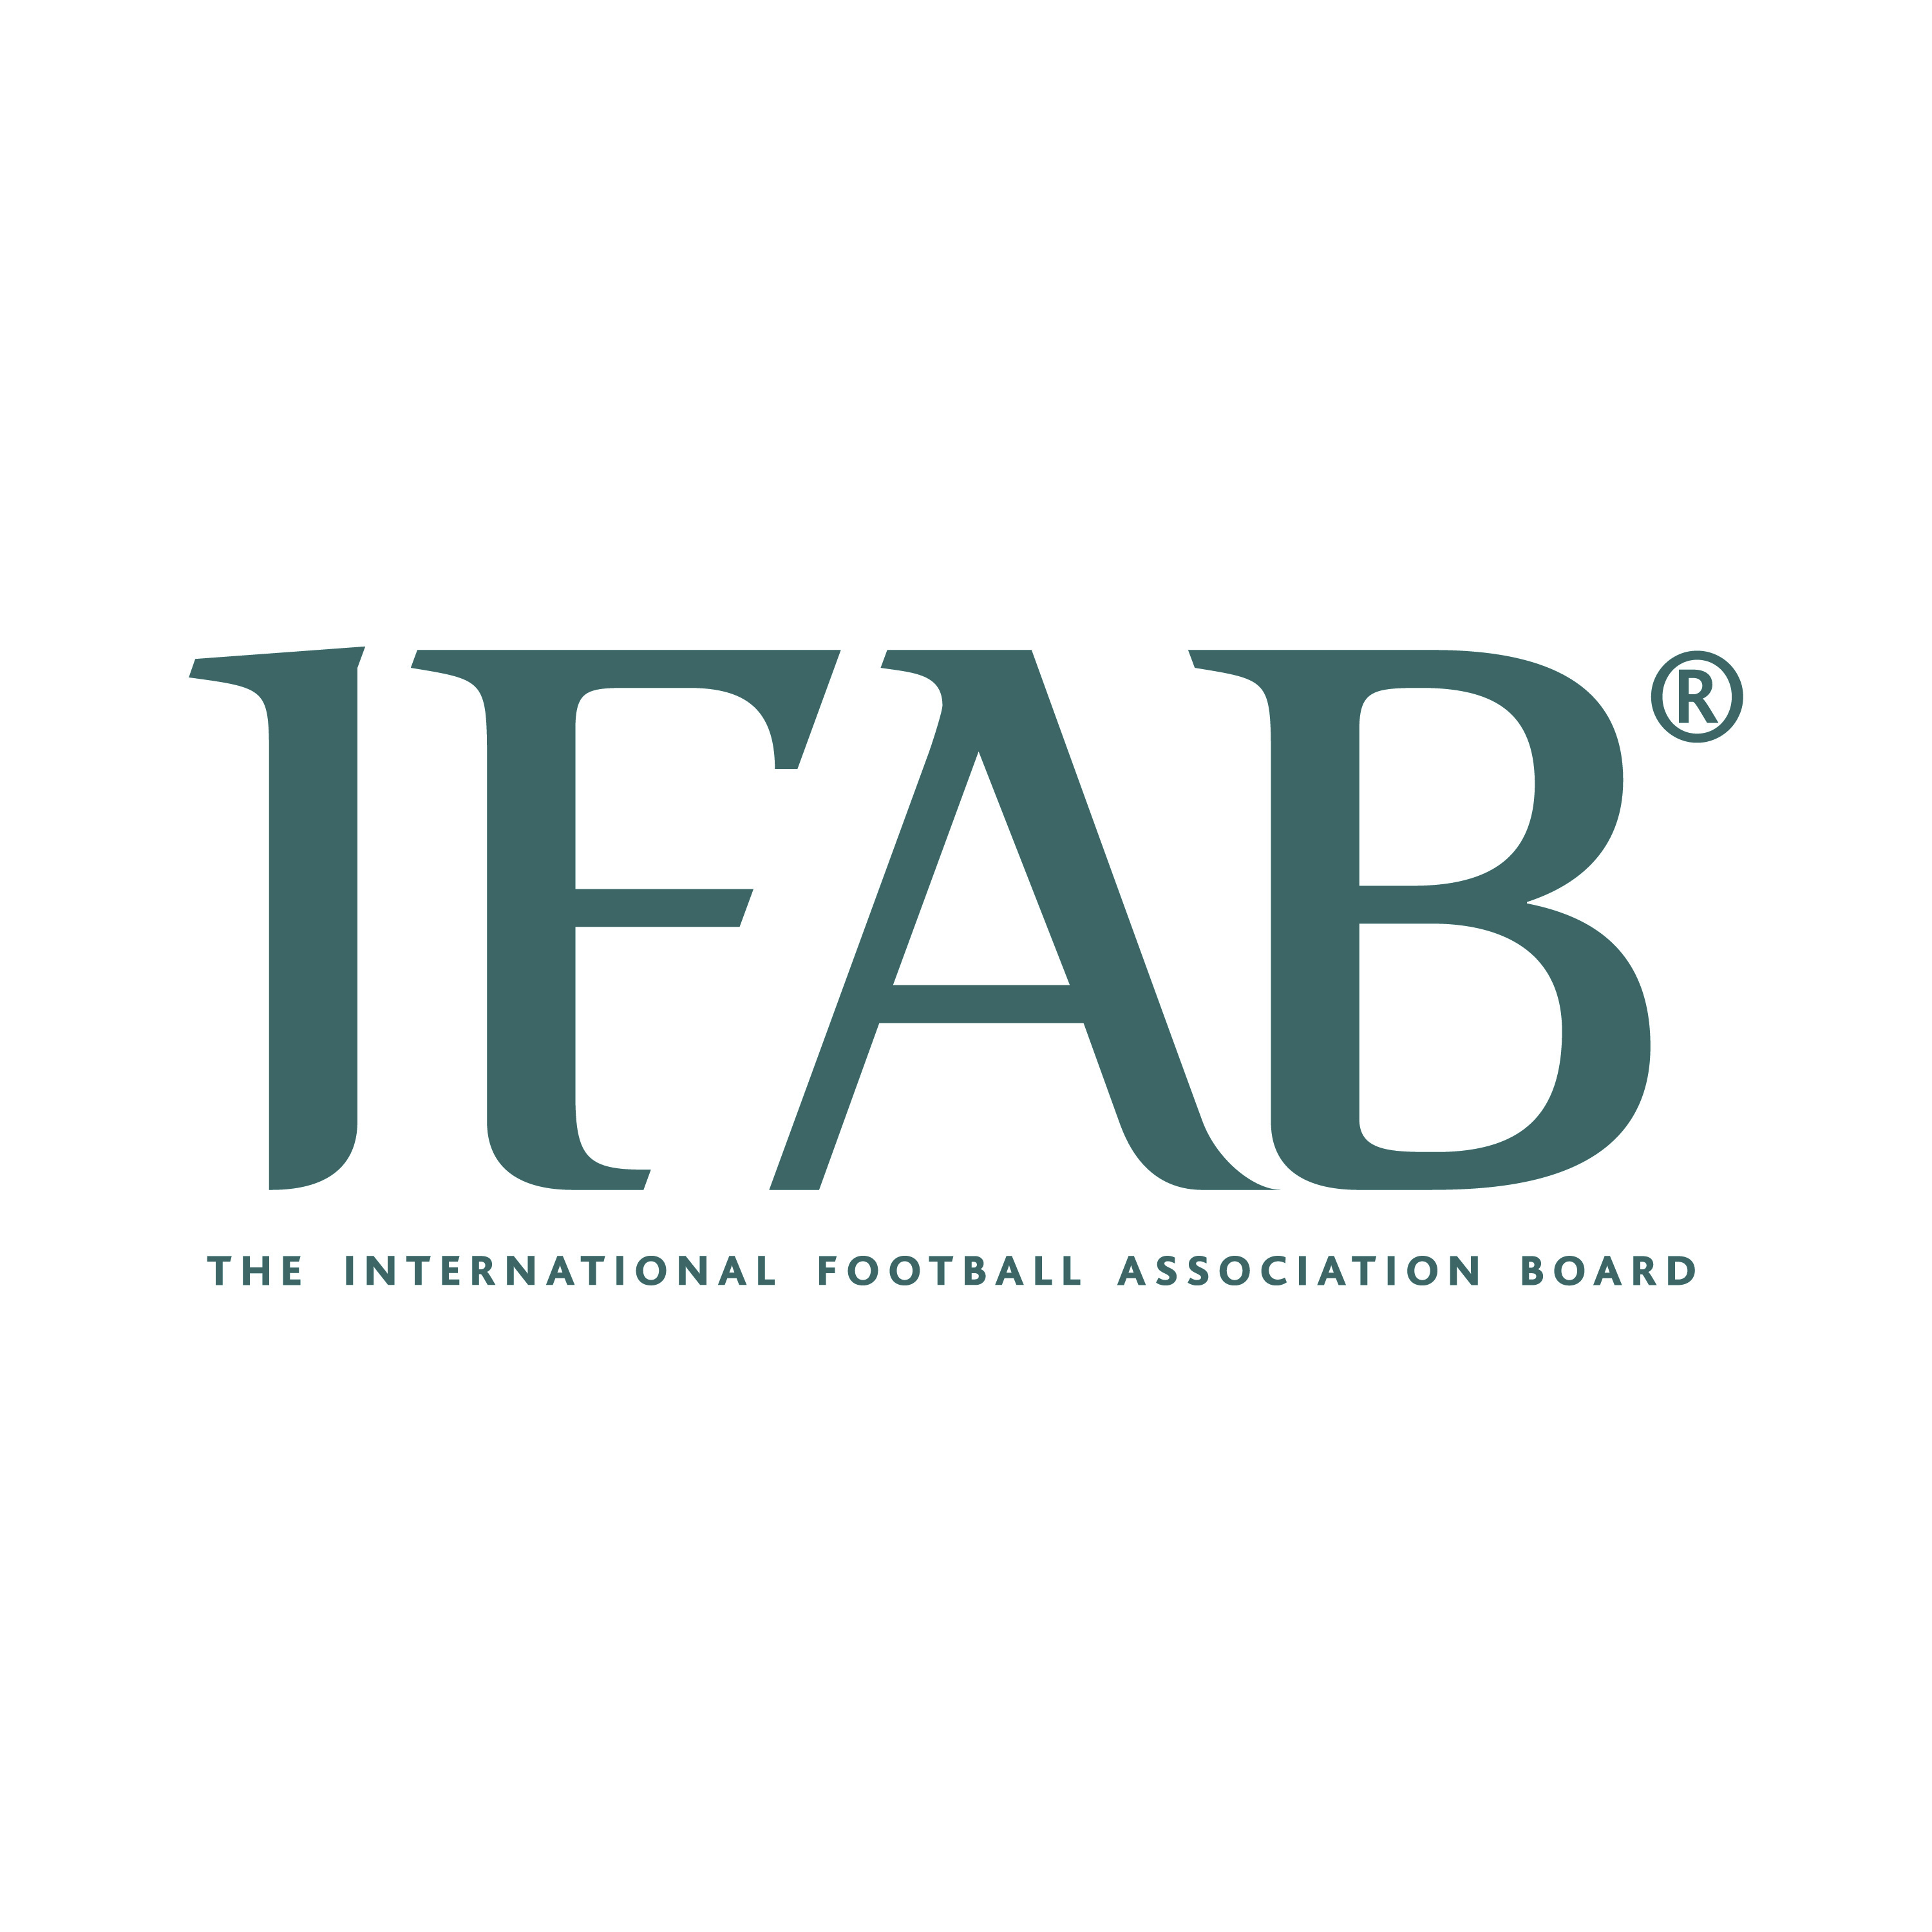 THE INTERNATIONAL FOOTBALL ASSOCIATION BOARD